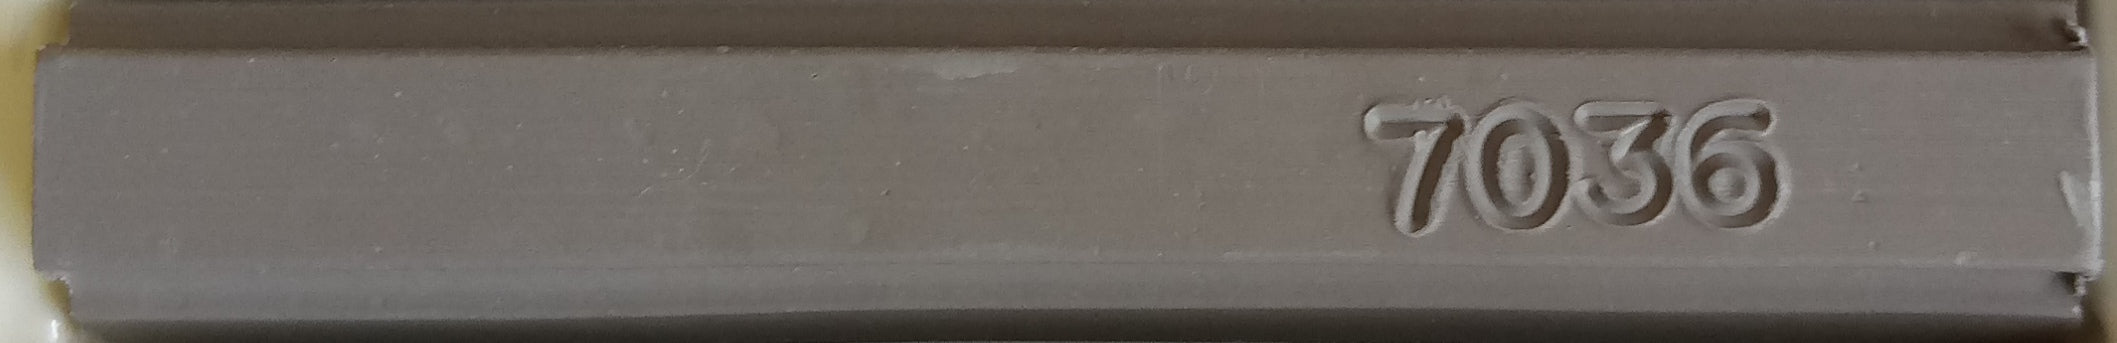 Konig 8cm Soft Wax or Hard Wax Filler Stick RAL 7036 PLATINUM GREY